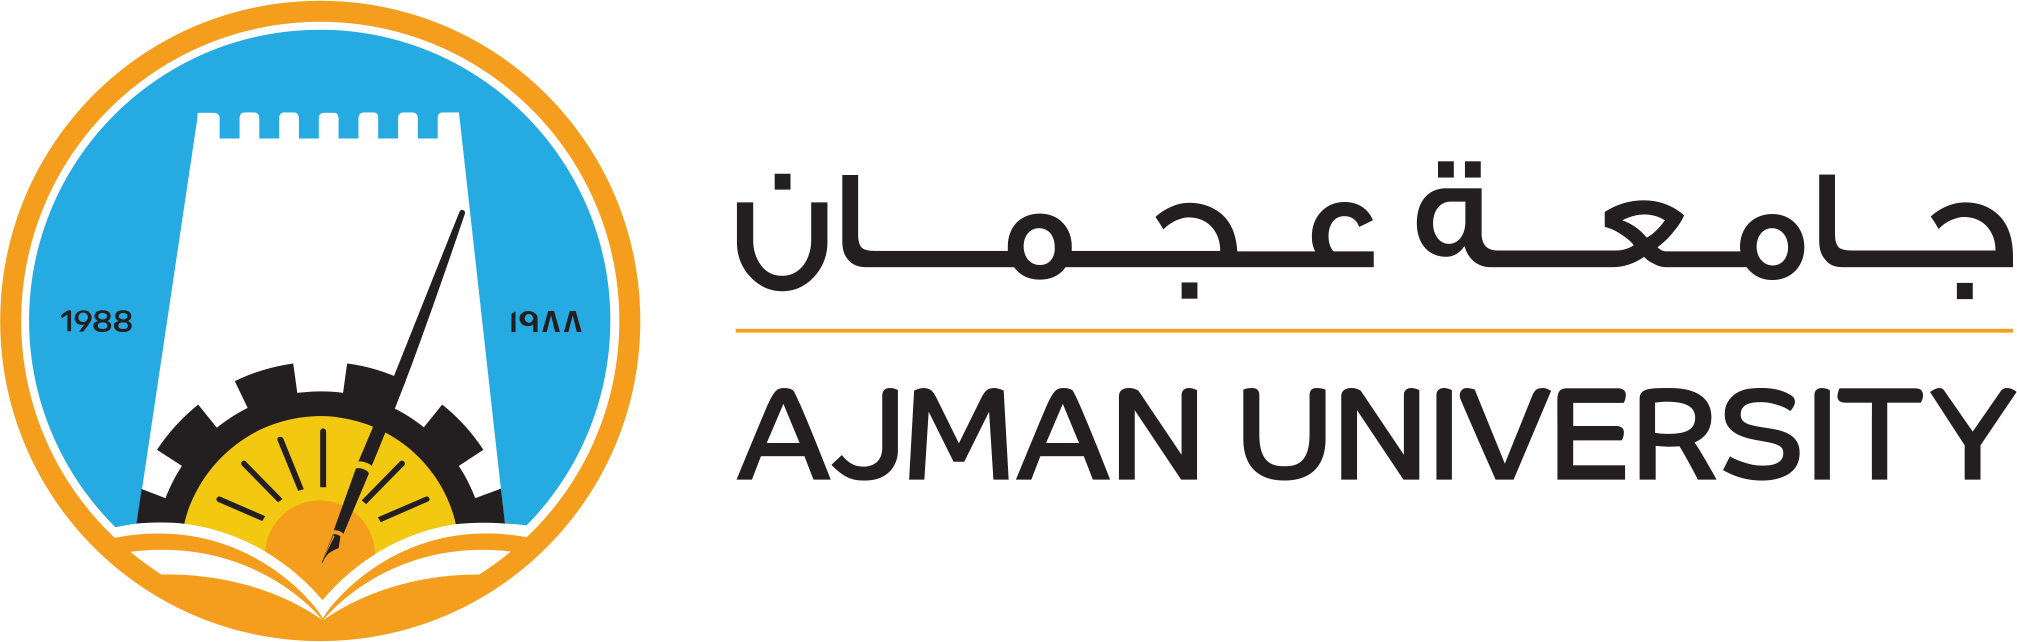 School:Ajman University - University Innovation Fellows